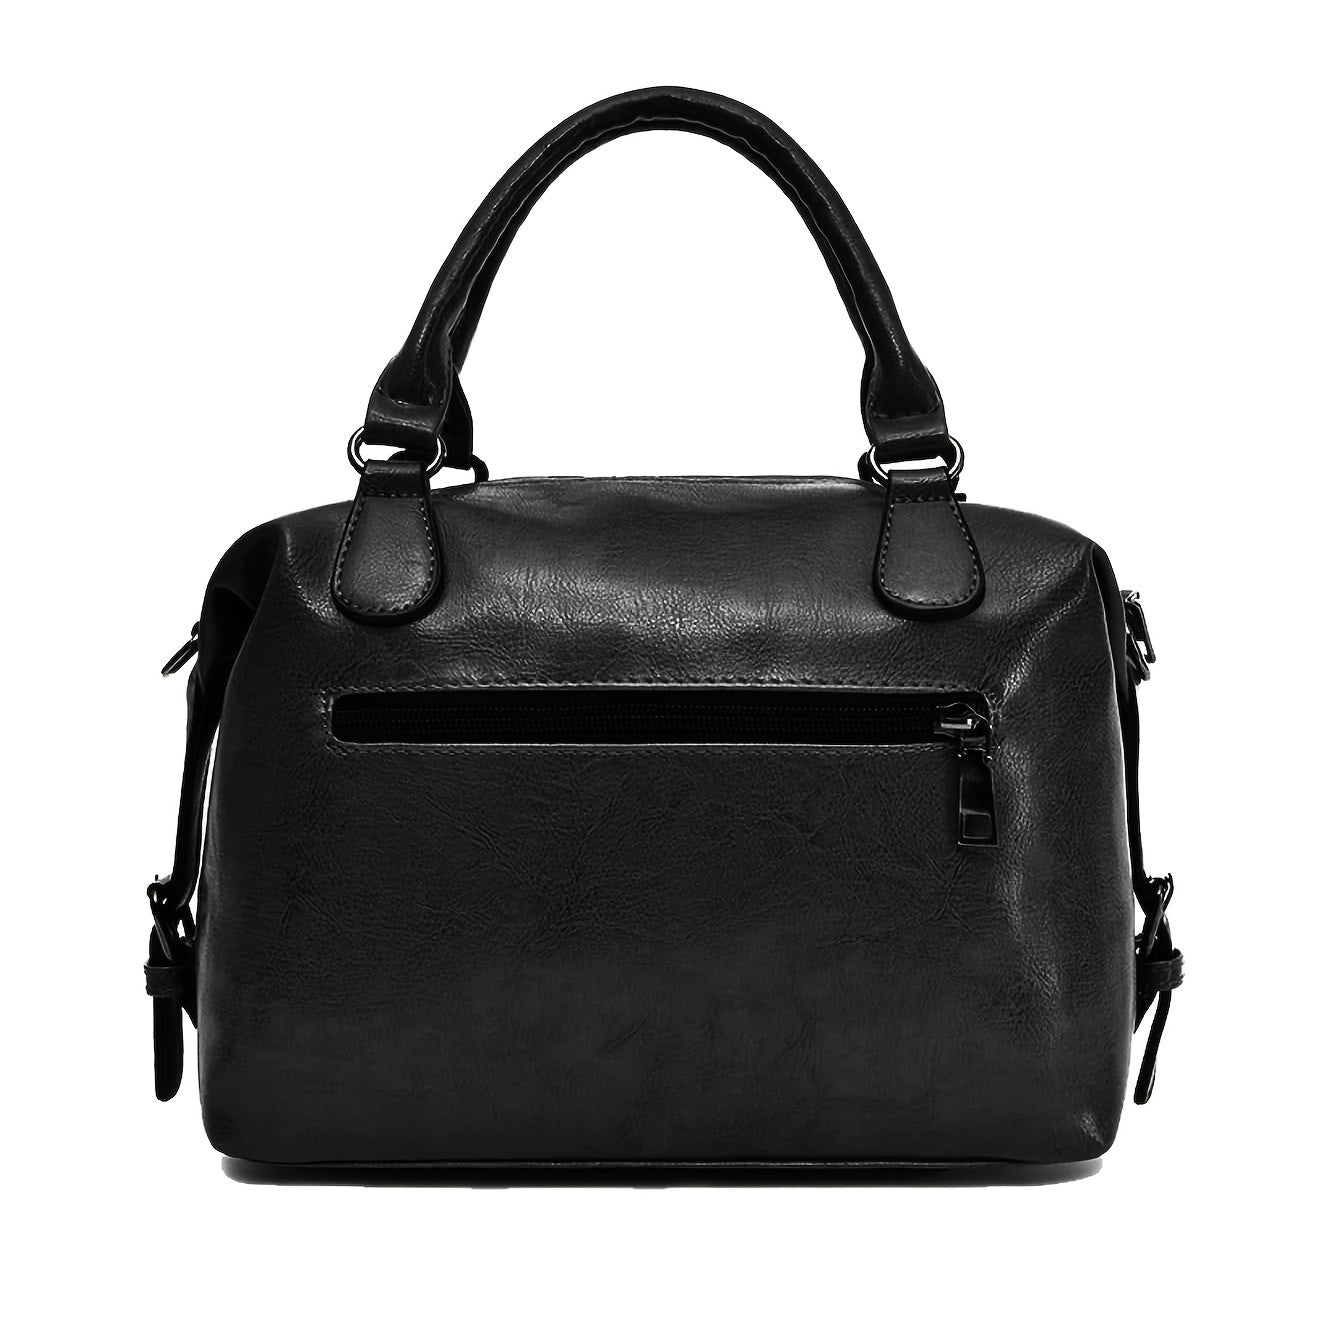 Retro Minimalist Satchel Bag - Top Handles Bag - PU Leather Multifunctional Shoulder Bag